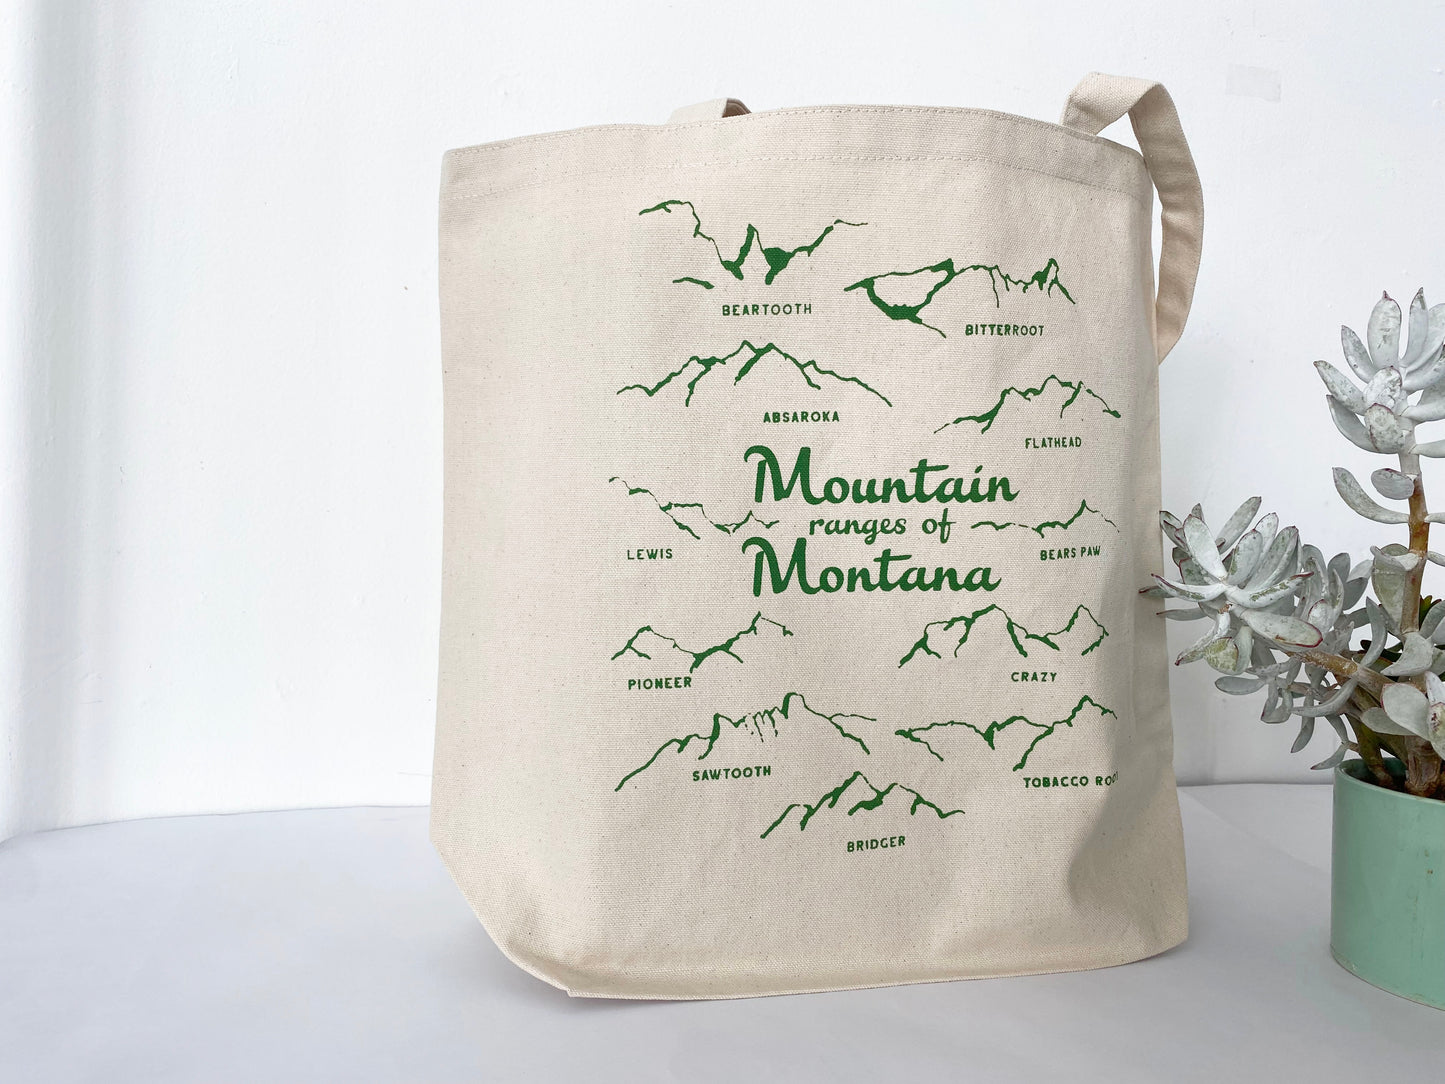 Mountains of Montana cotton canvas tote bag reusable shopper shopping bag hand illustration drawn mountain range souvenir western coin laundry travel bag 